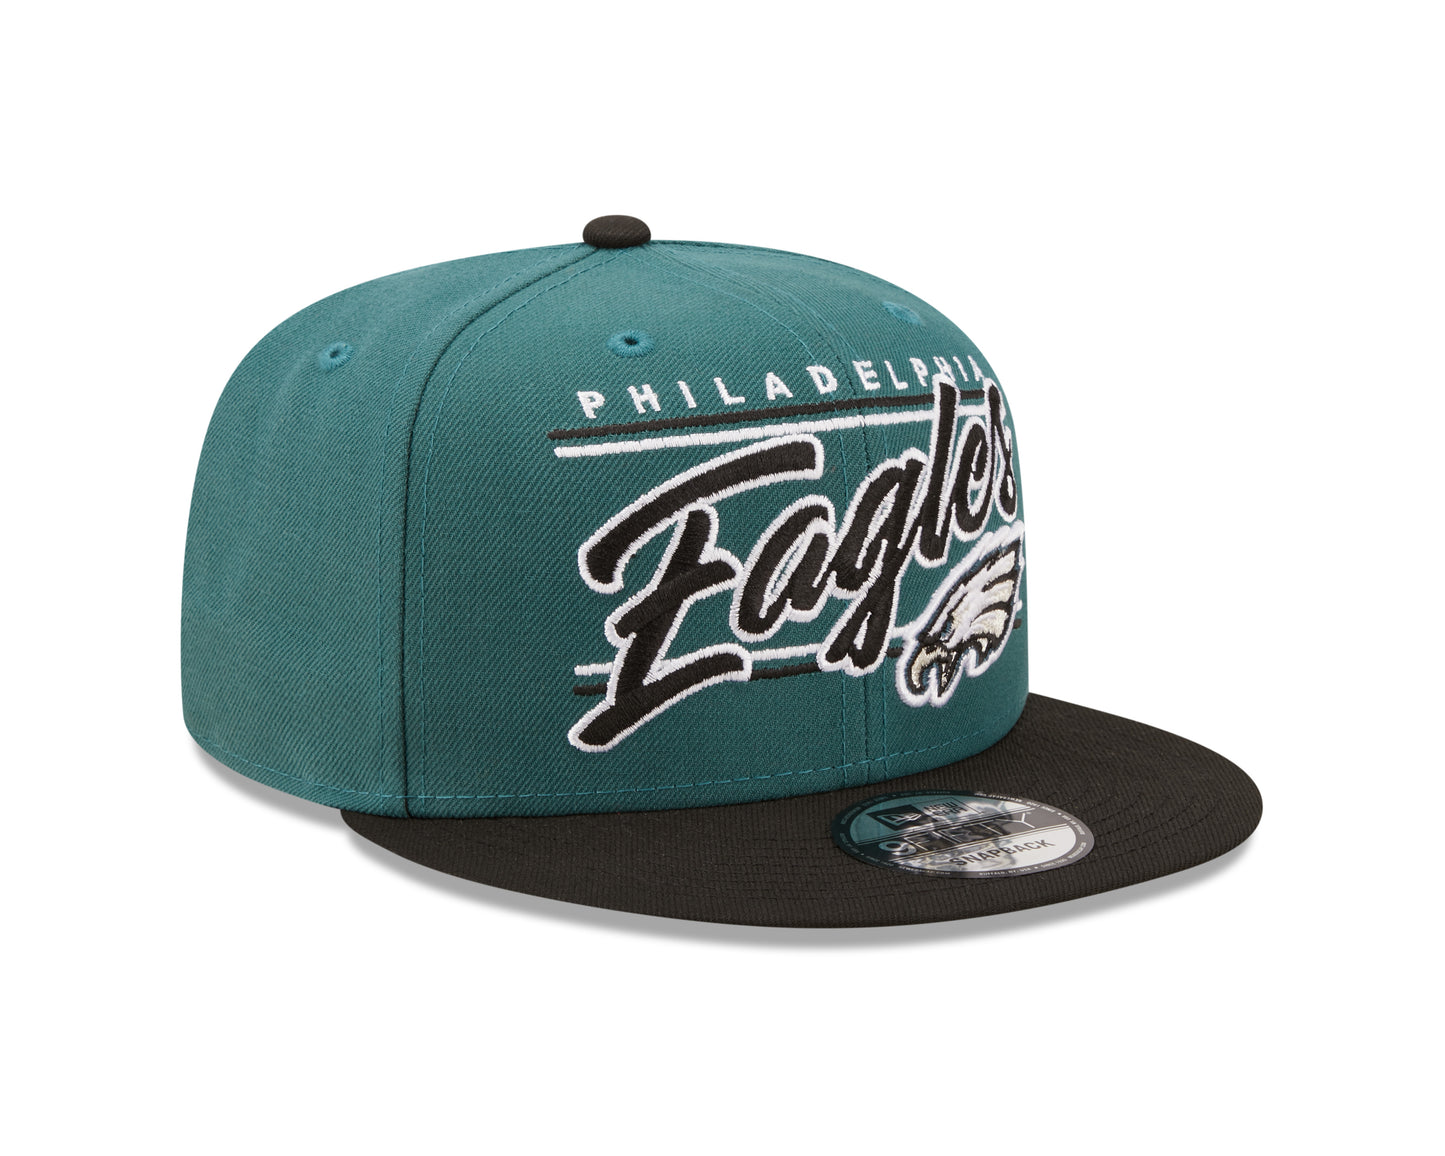 Philadelphia Eagles NFL New Era Team Script 9FIFTY Snapback Hat - Green